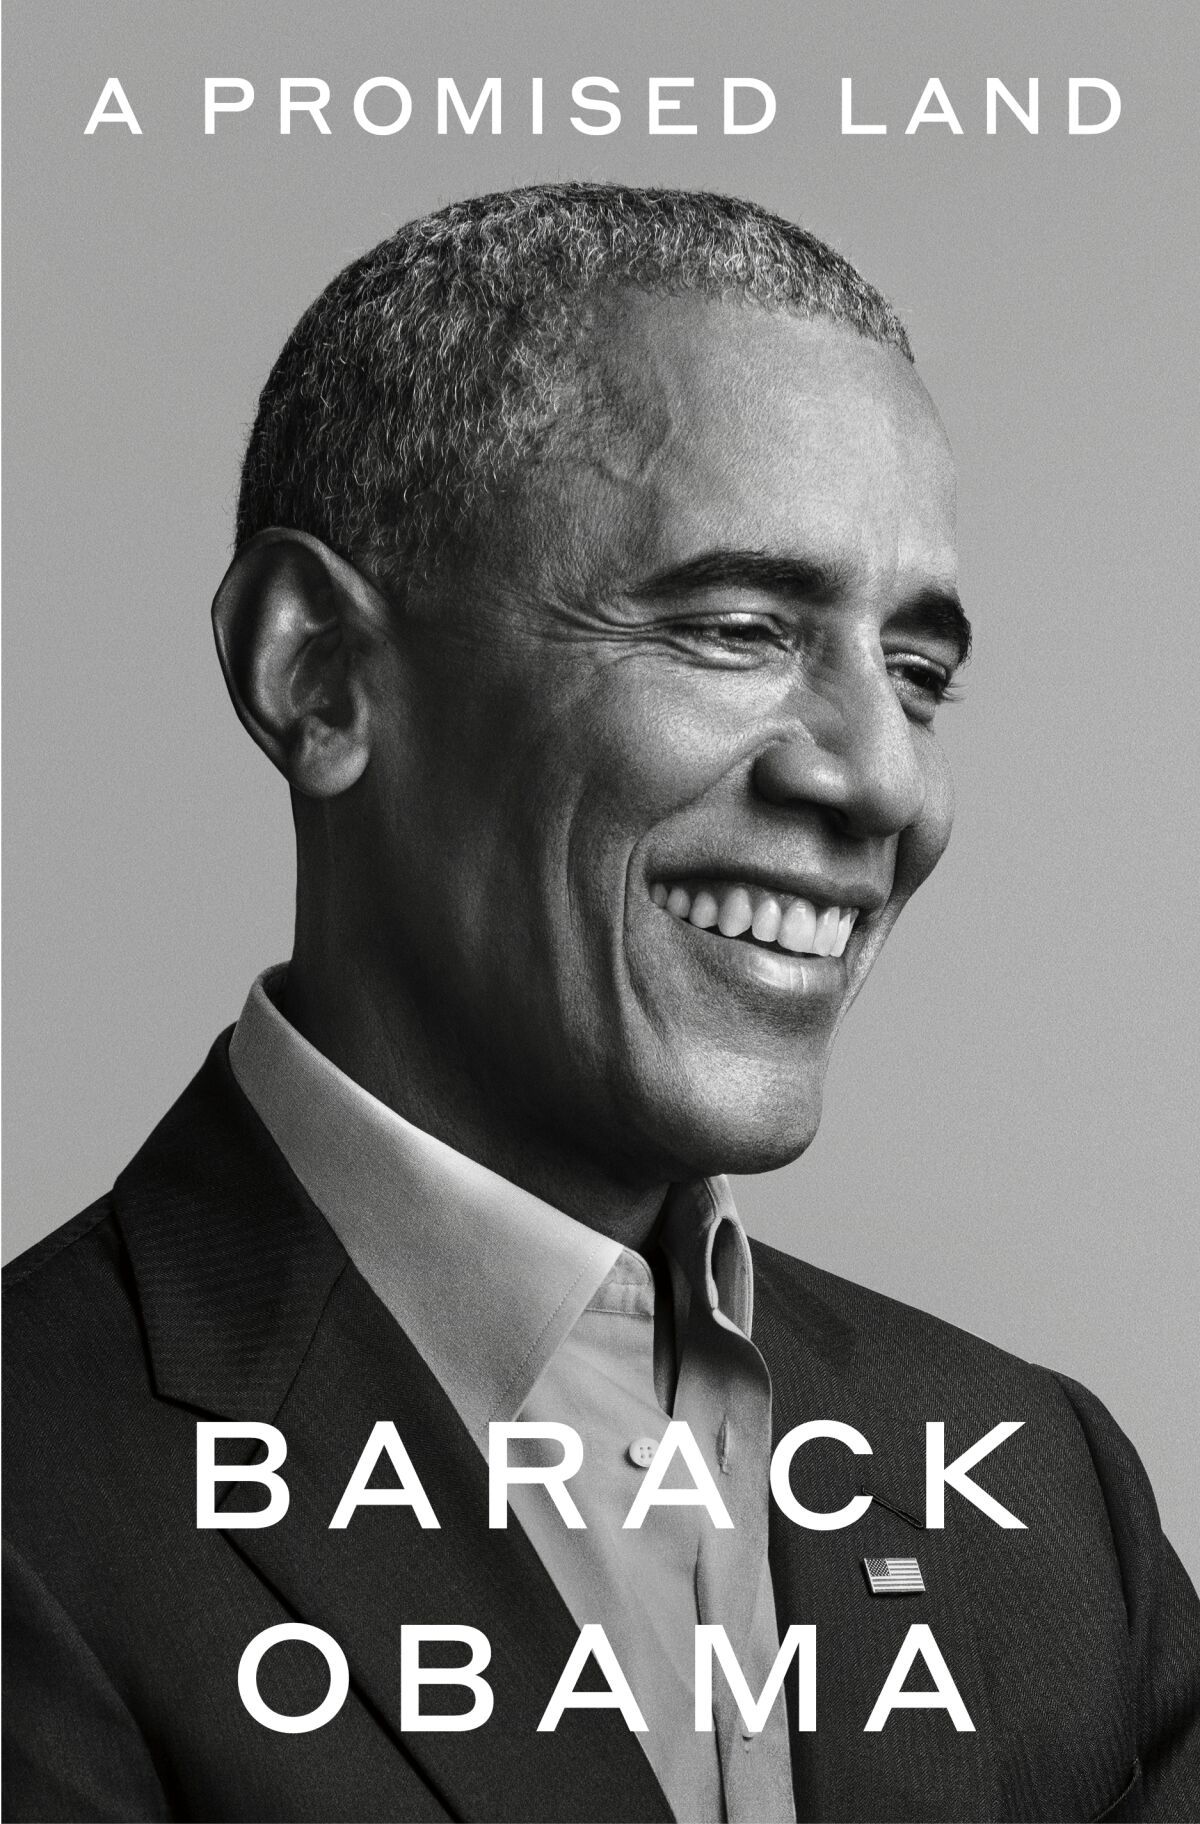 Book jacket for "A Promised Land" by Barack Obama. 